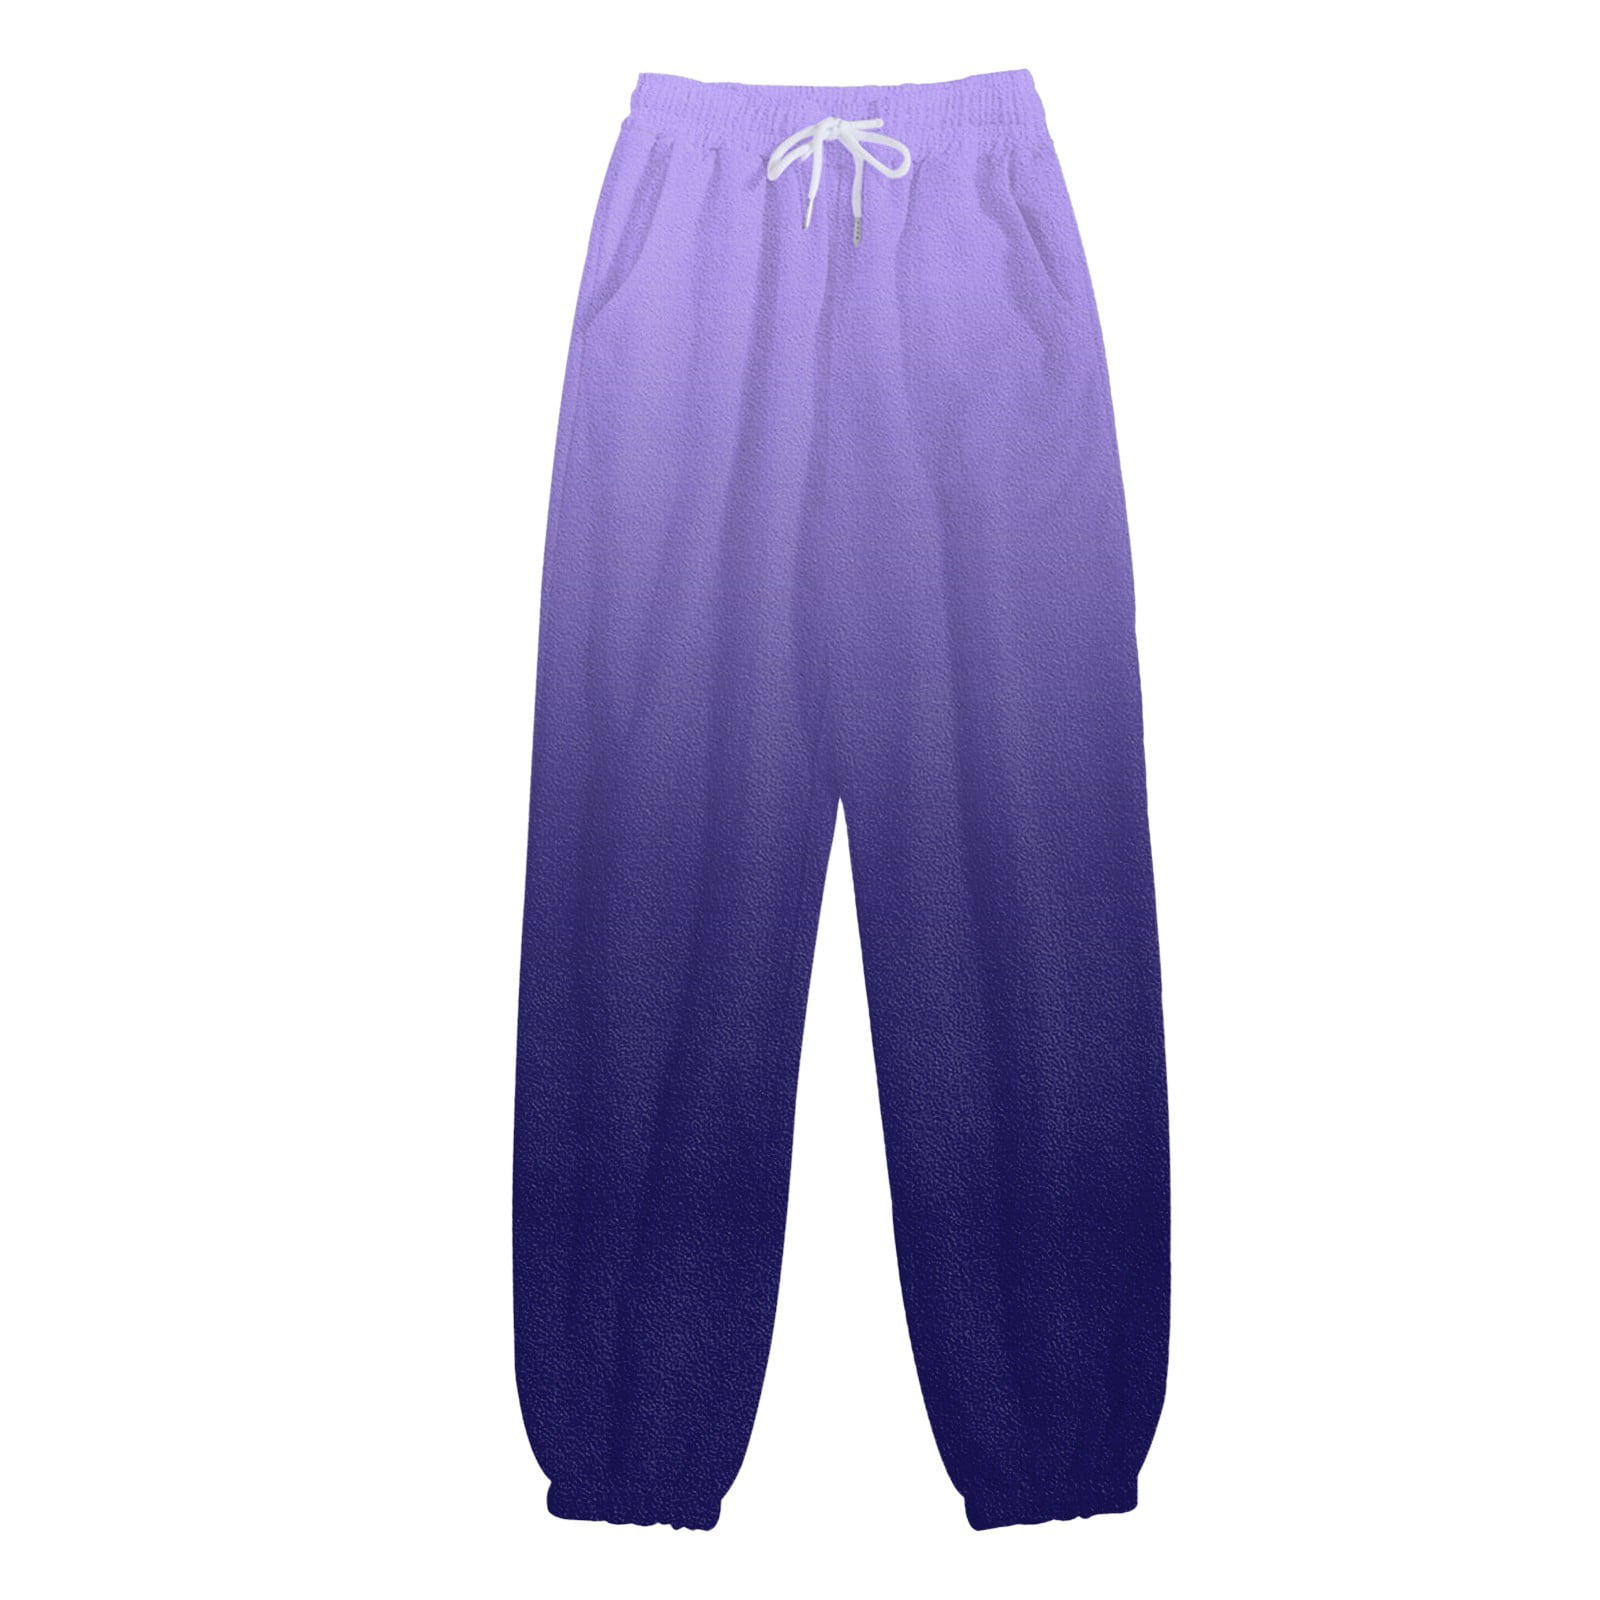 Dyfzdhu Fashion Pants for Women Casual Gradient Print Bottom